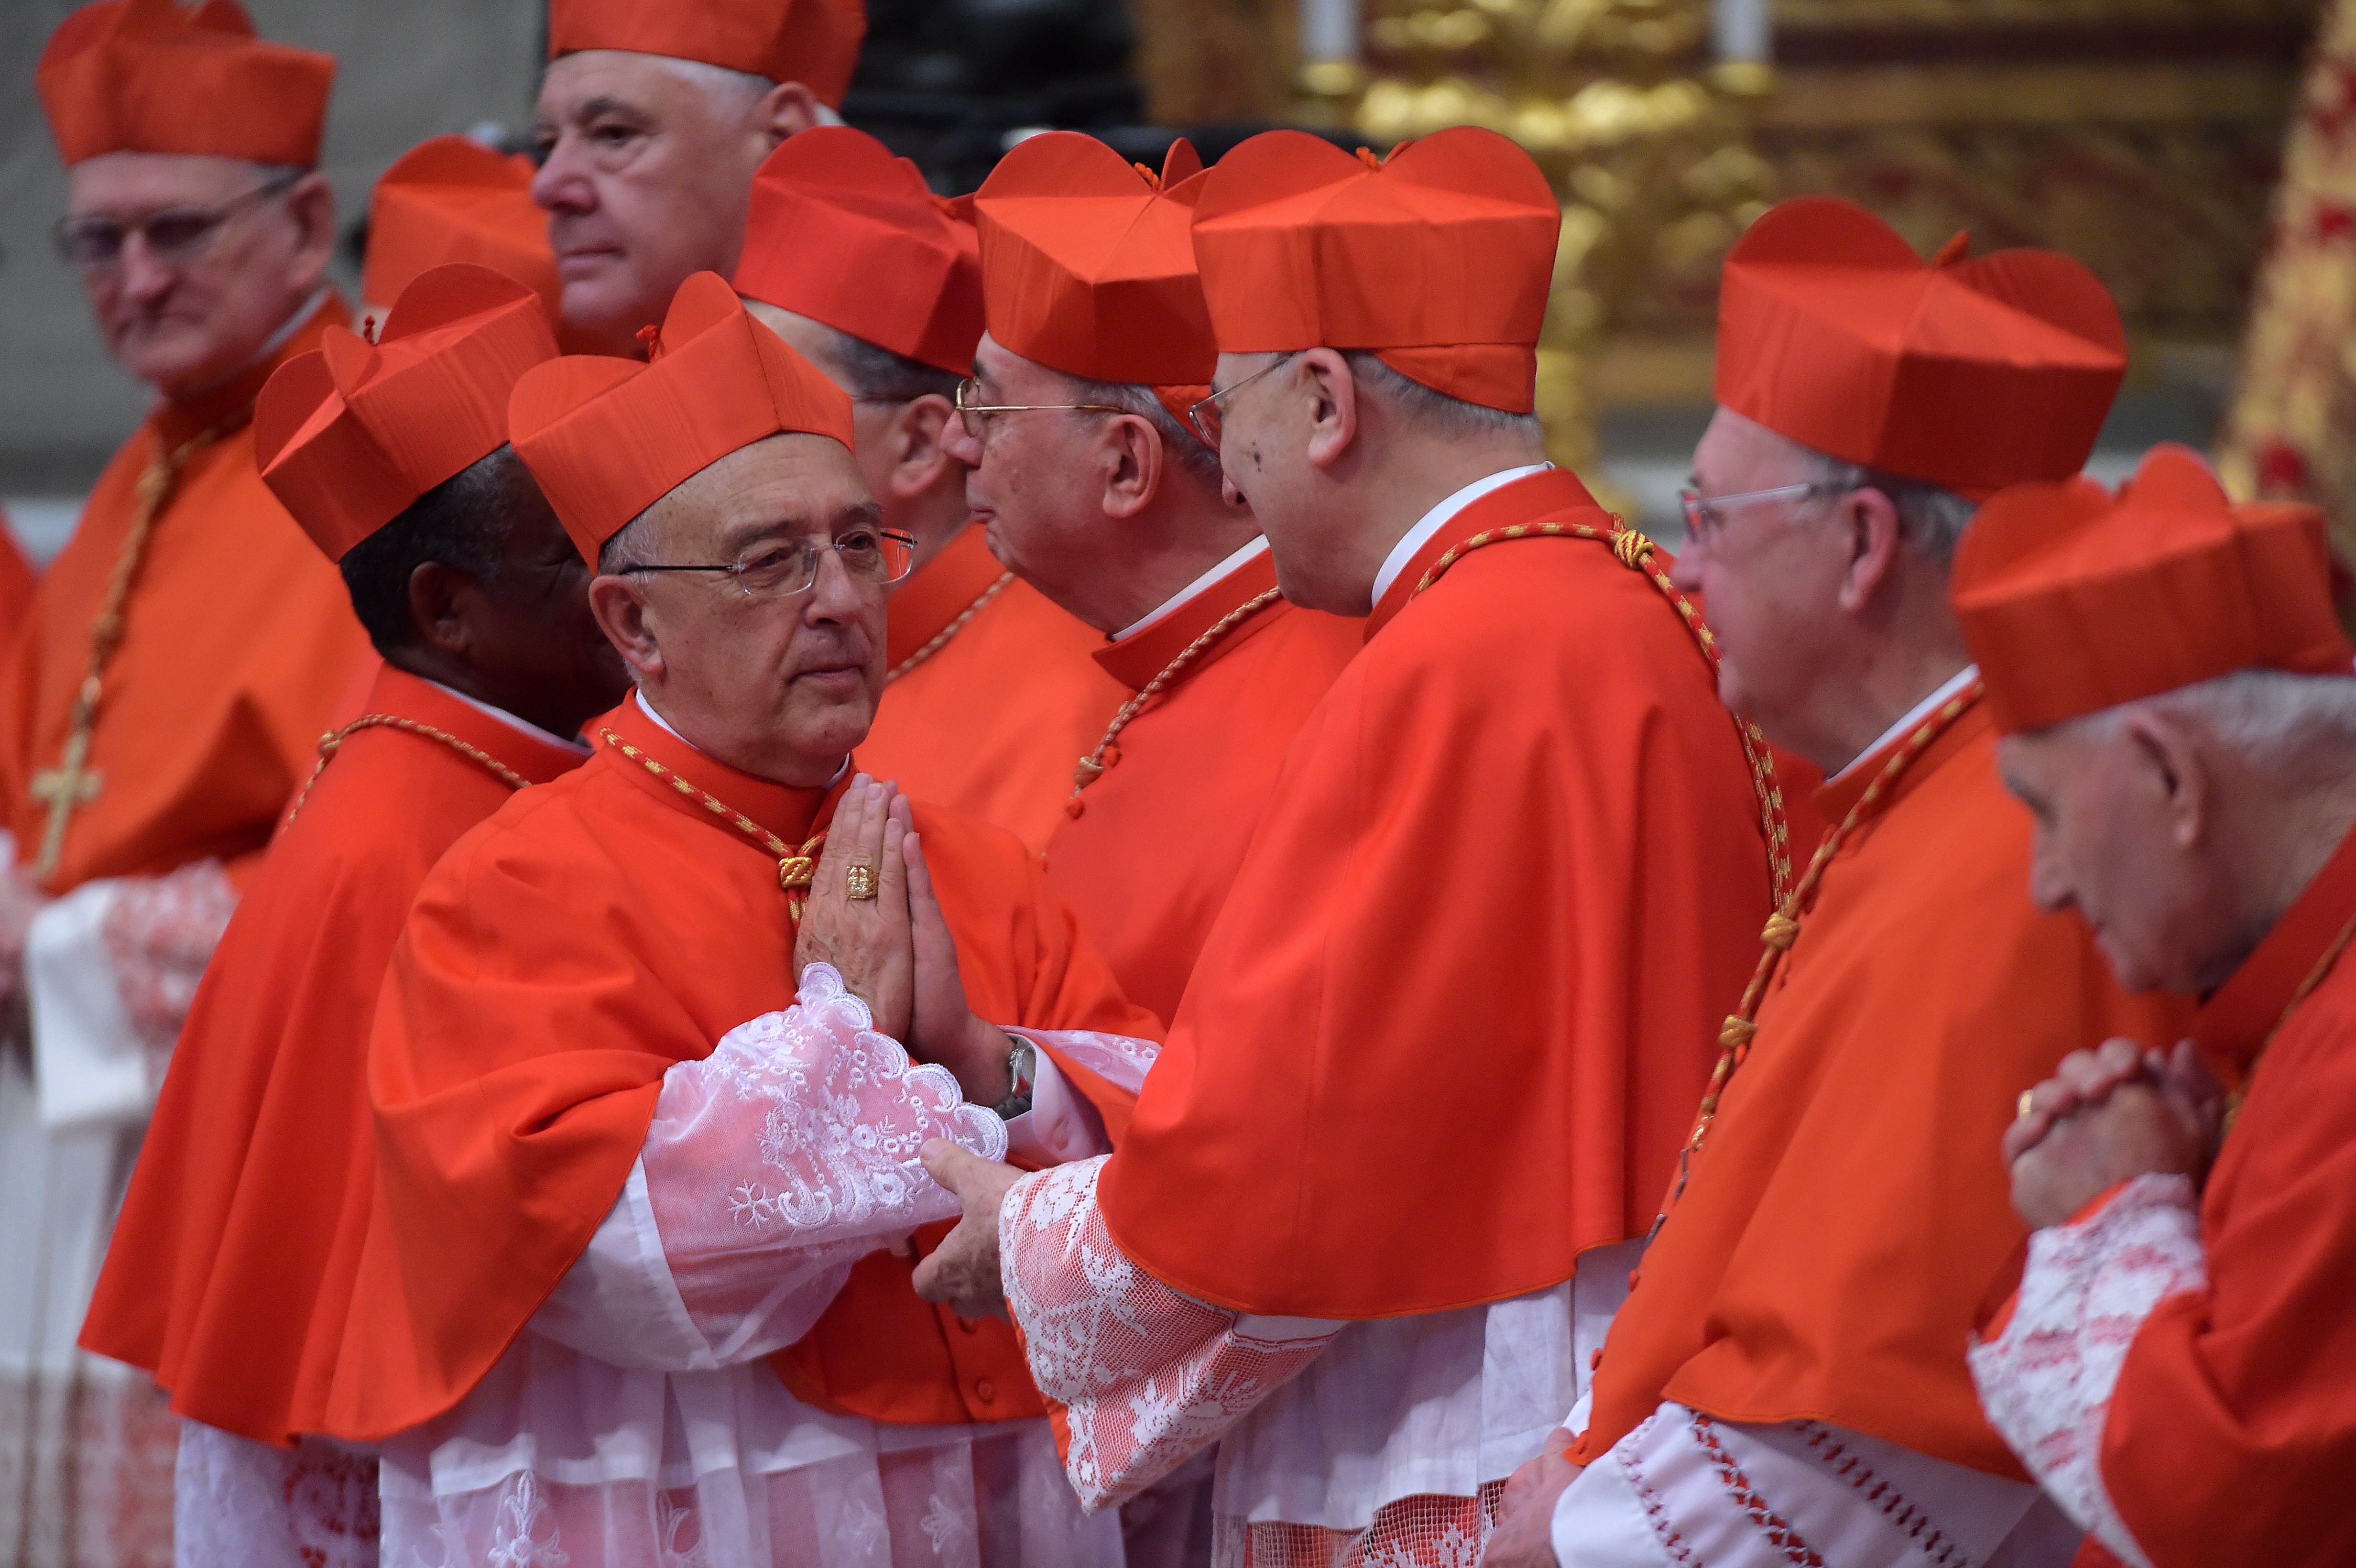 Suppress Sodalitum, says Peru cardinal